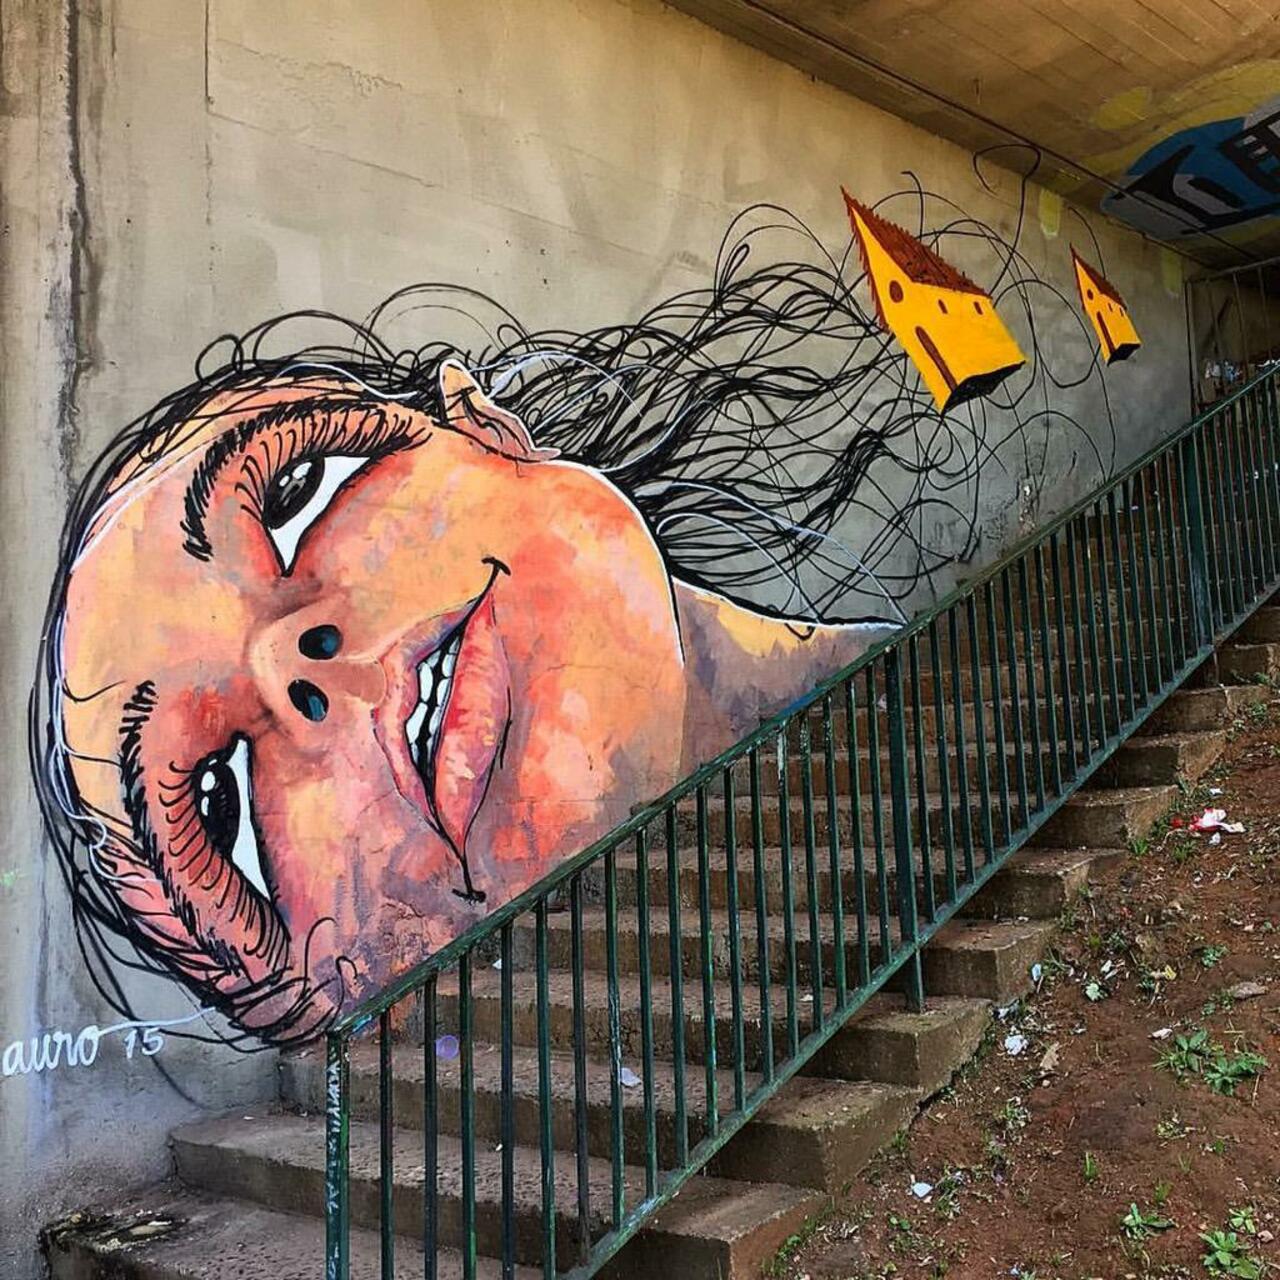 Street Art by Reveracidade in São Paulo 

#art #graffiti #mural #streetart http://t.co/QMJbjBLSqA